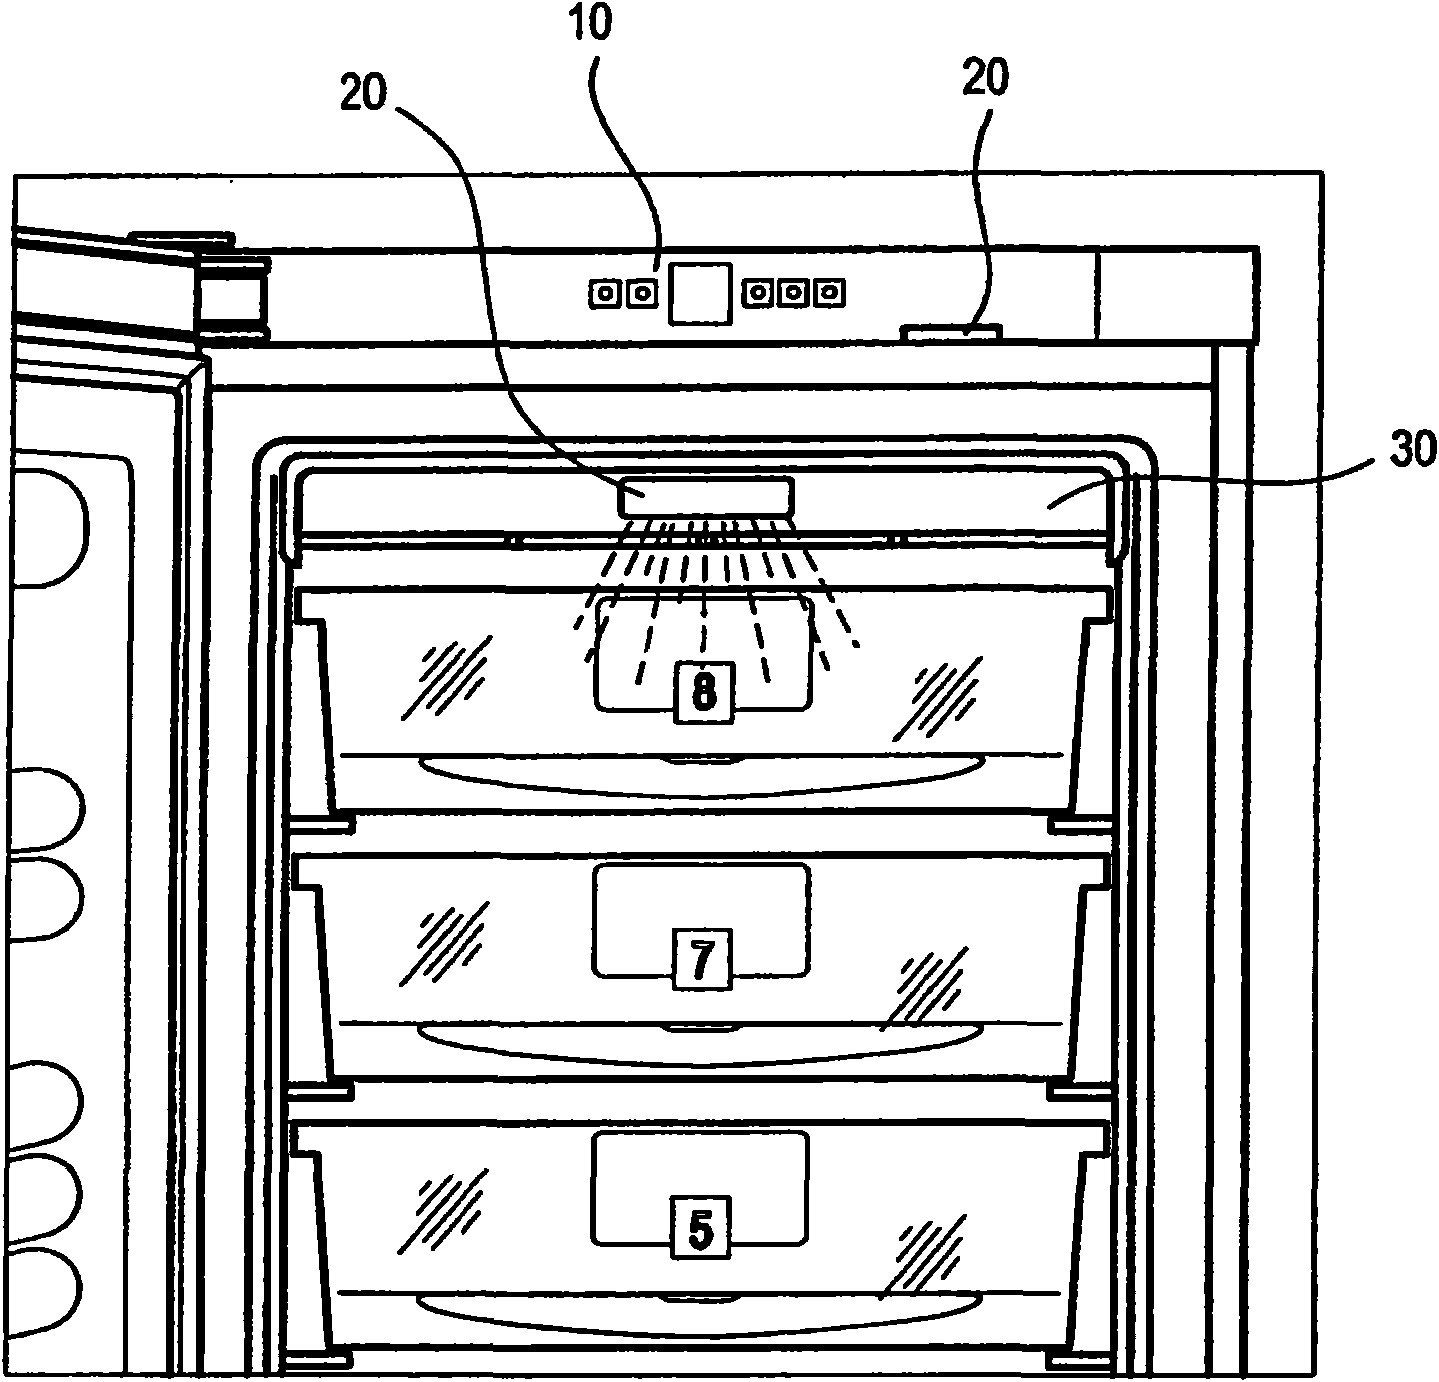 Refrigerator and/or freezer